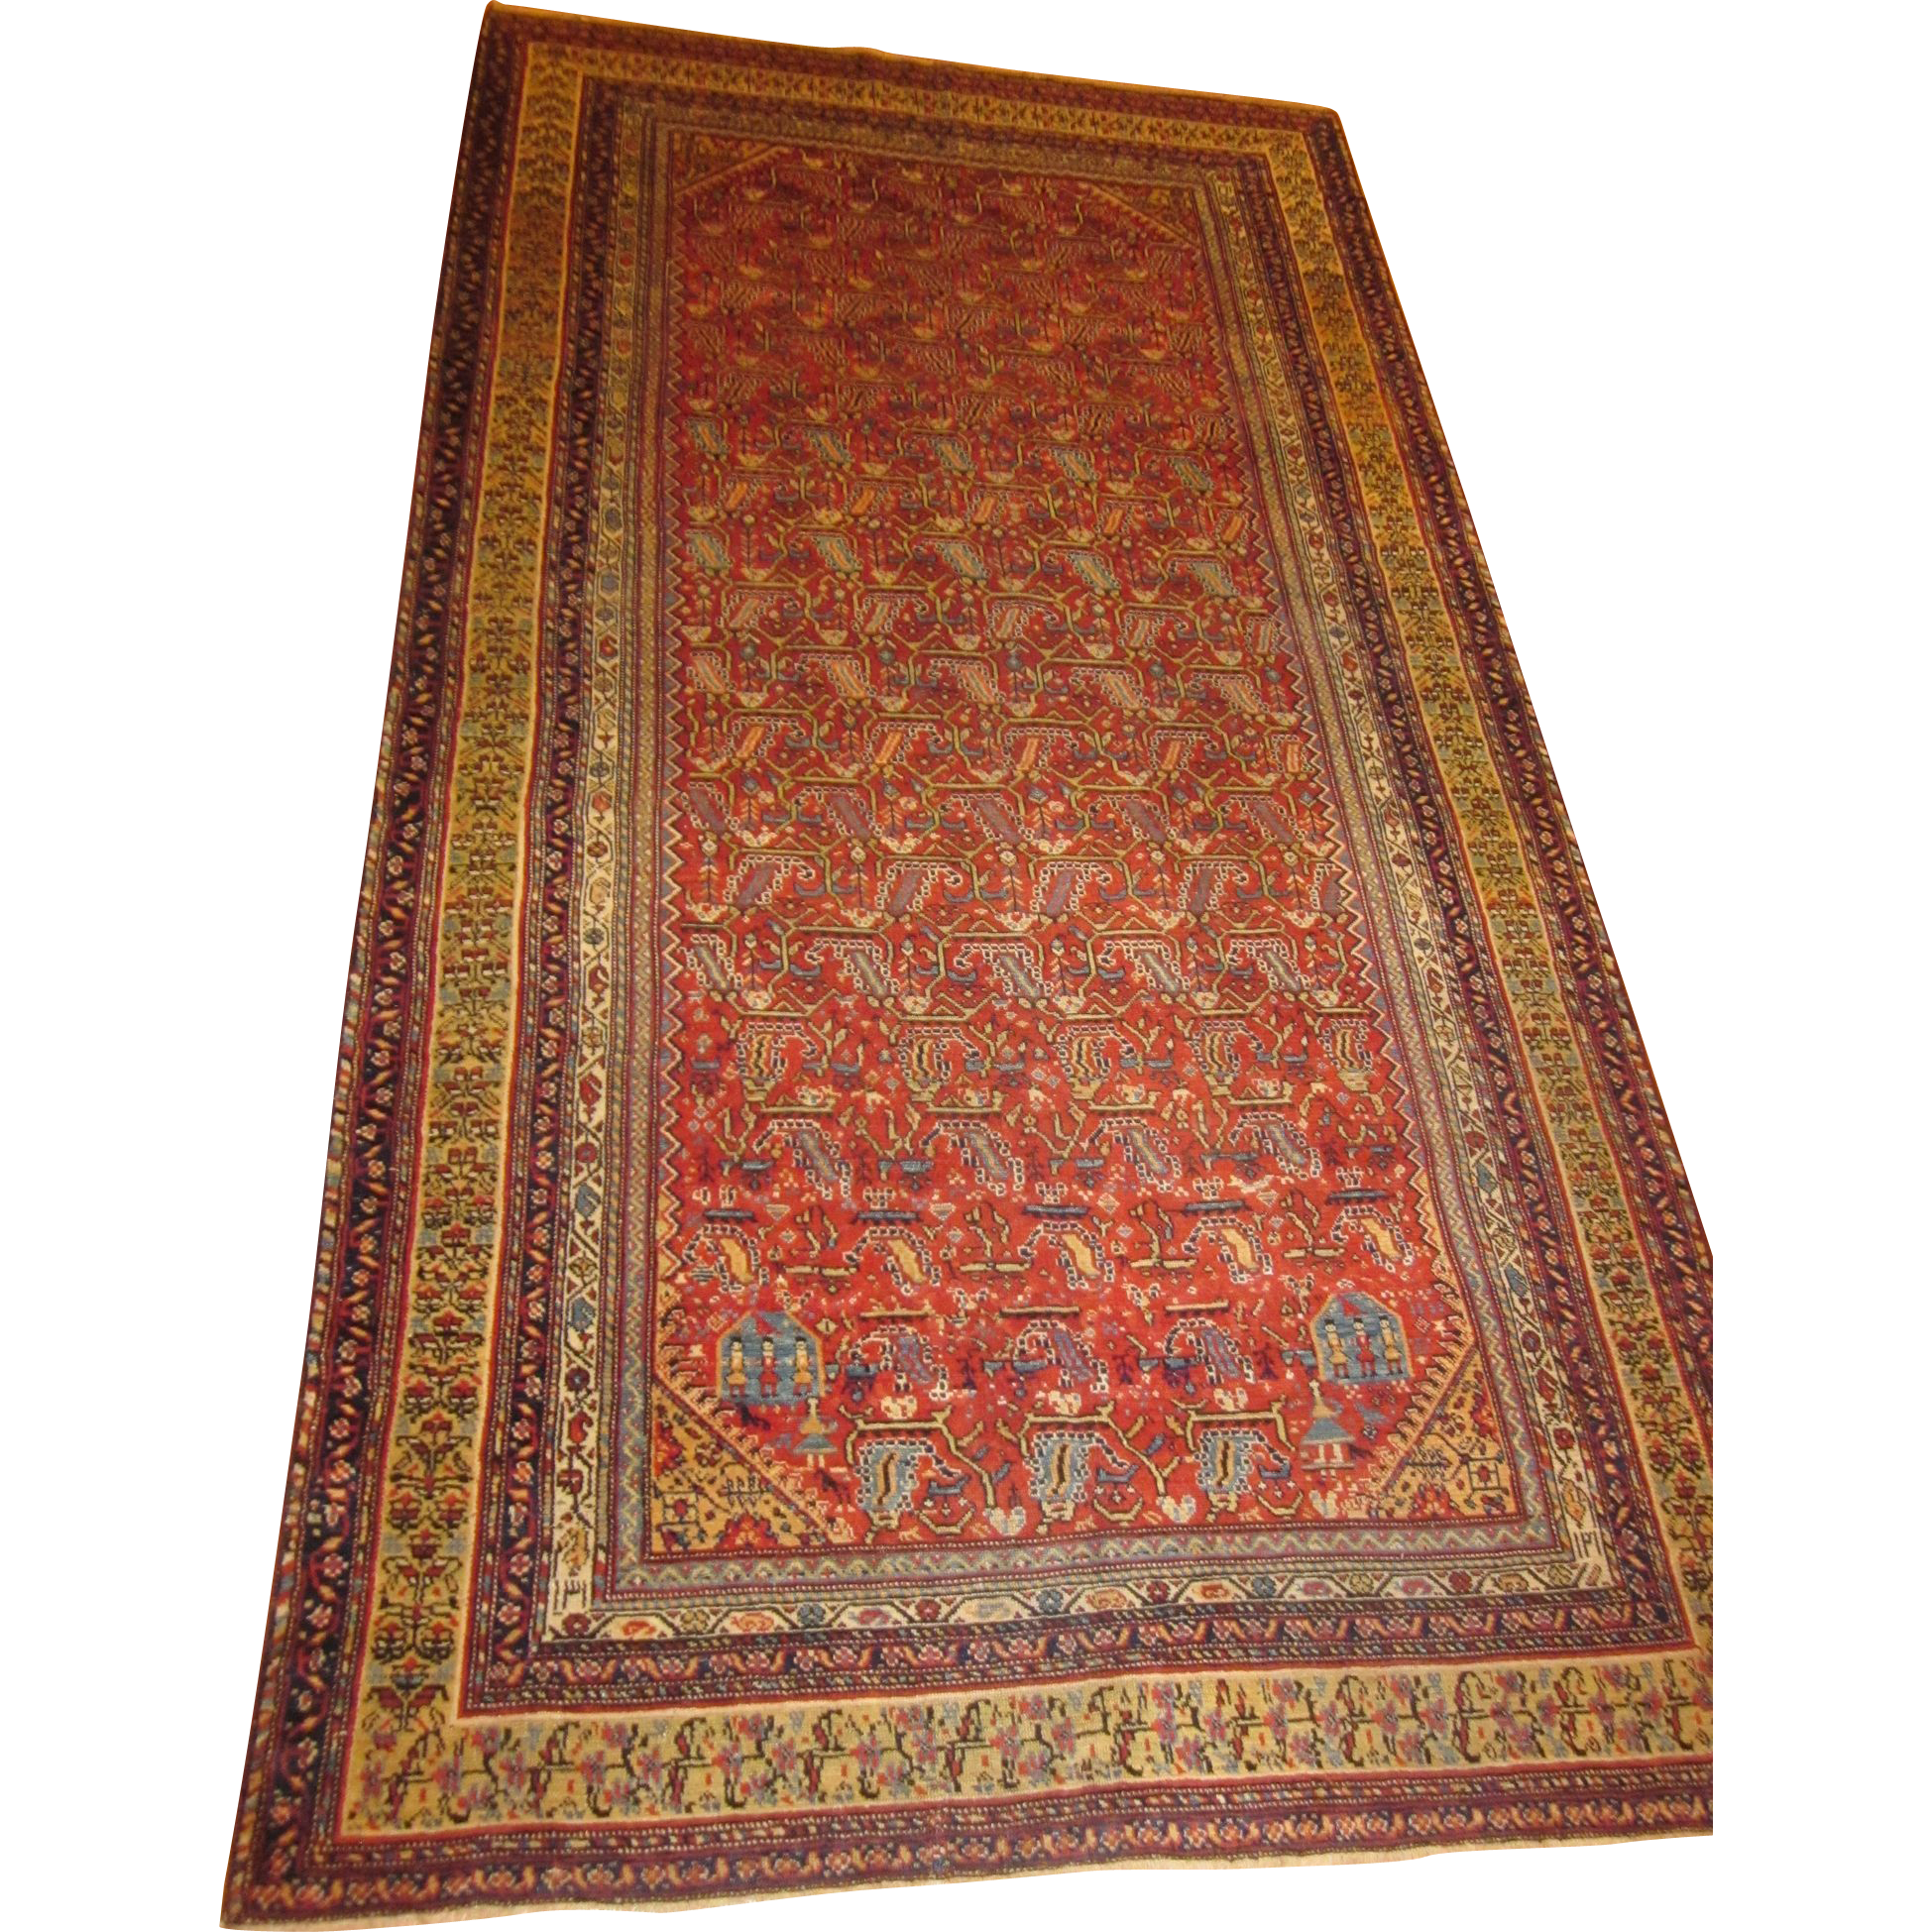 carpet rug png image collection download #27283